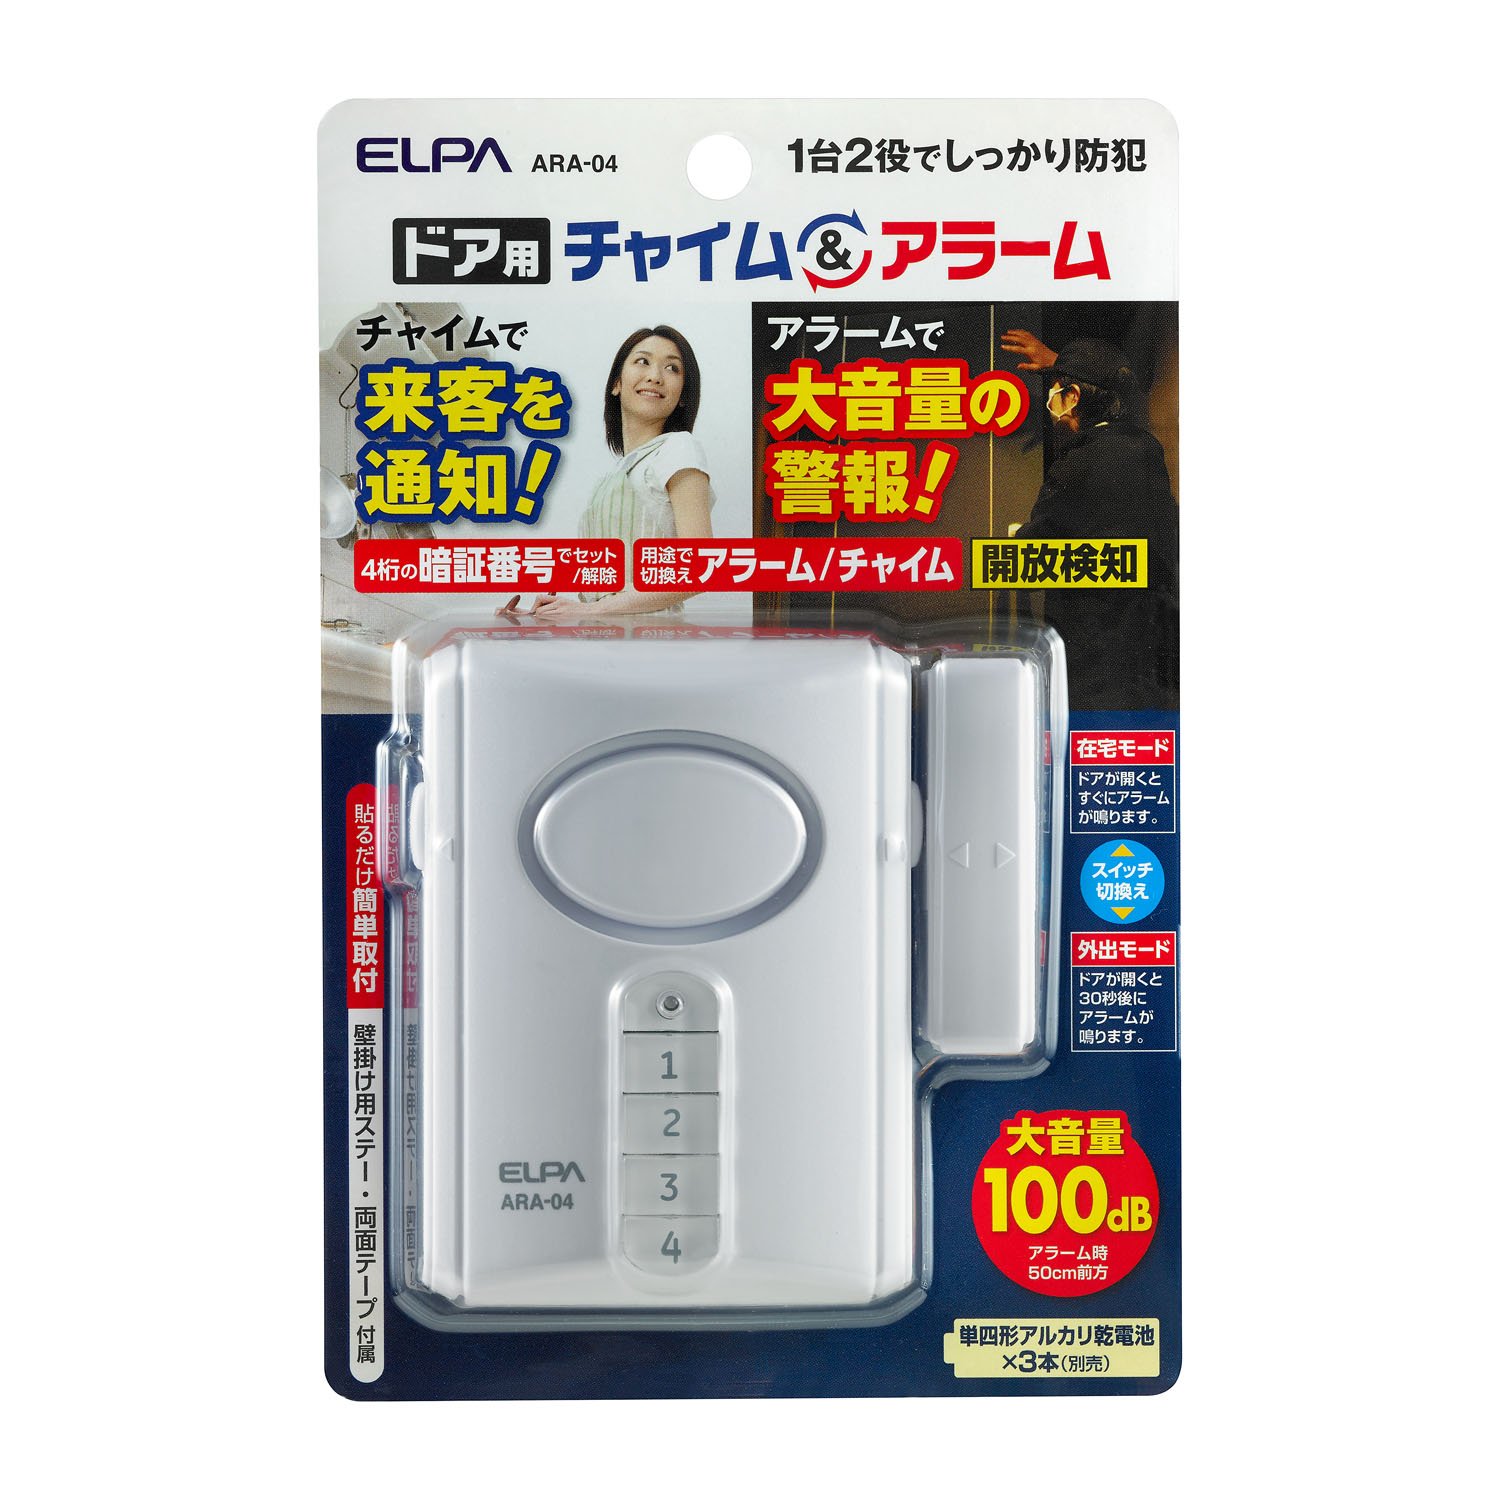  Elpa (ELPA) door for chime and alarm entranceway chime alarm approximately 100db/50cm chime approximately 85db/50cm ARA-04